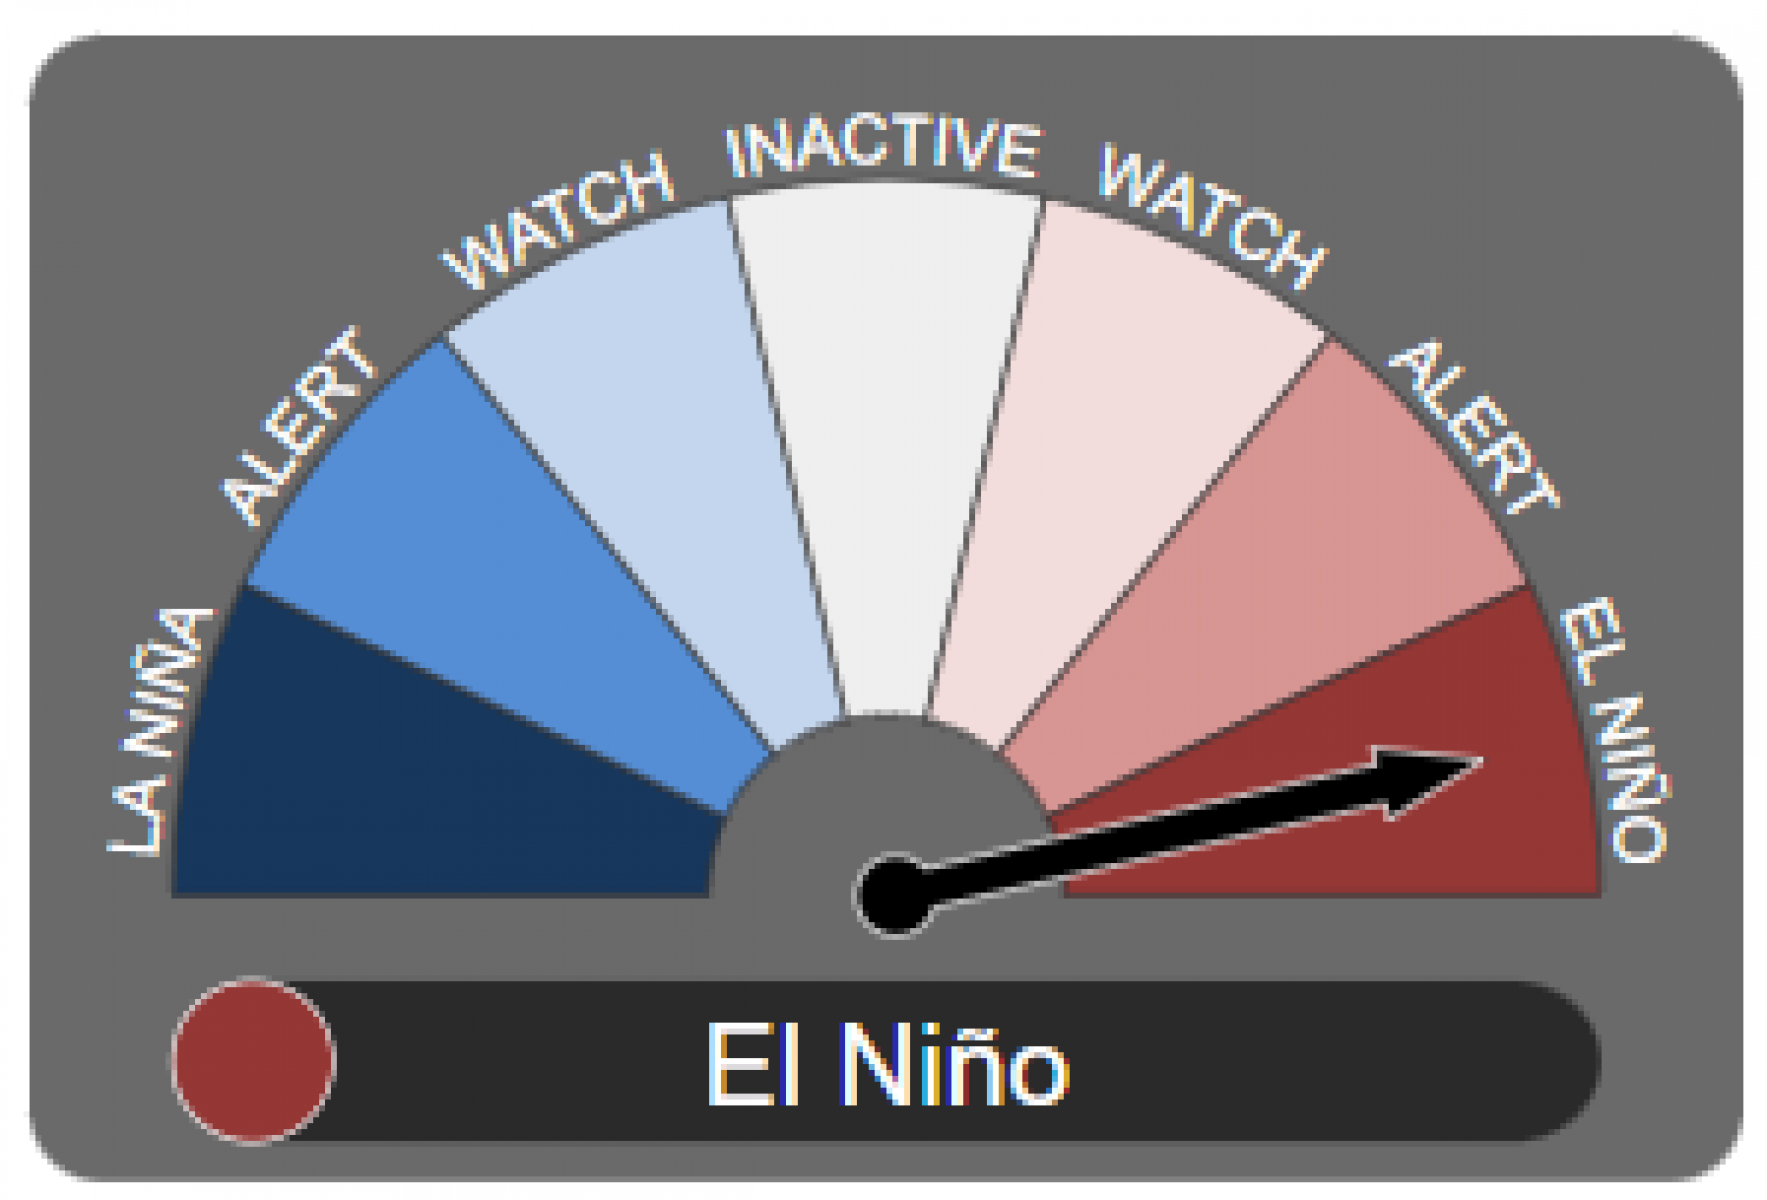 ENSO outlook set to El Nino status